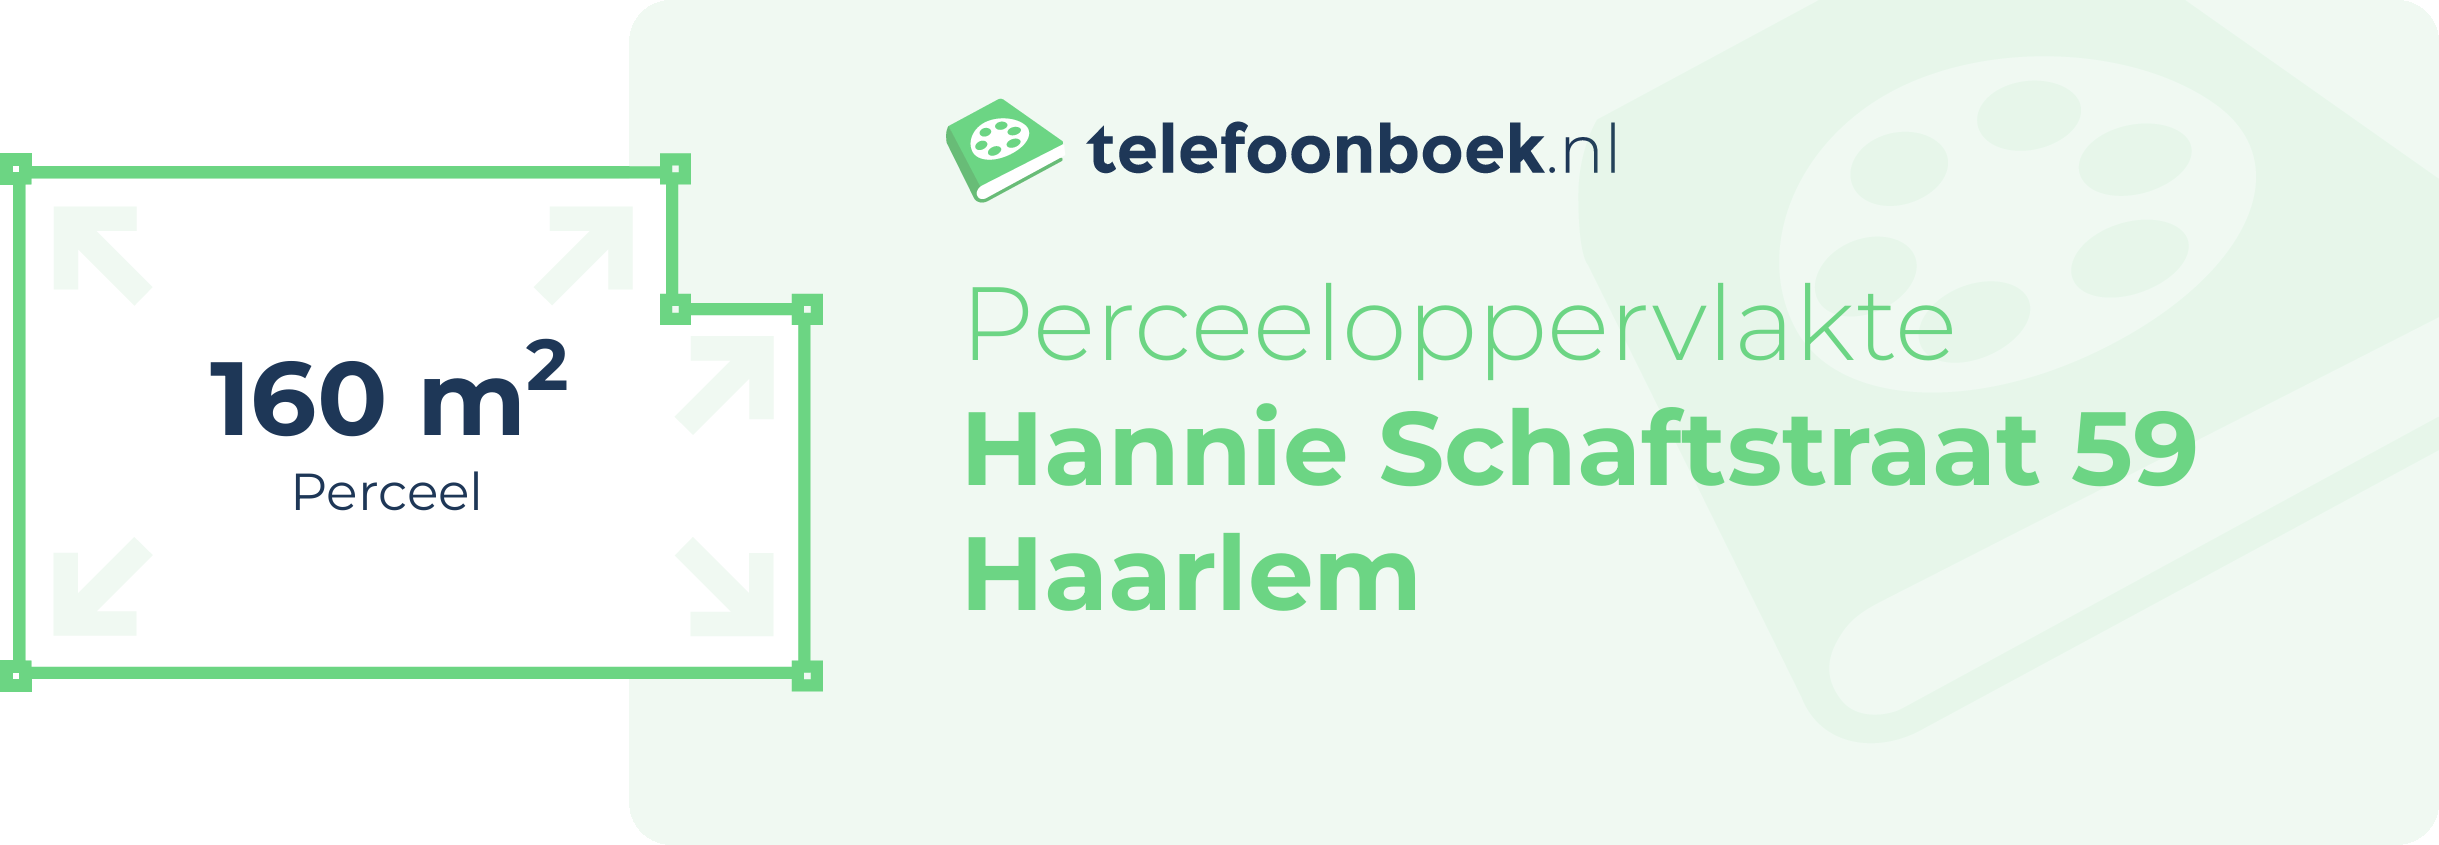 Perceeloppervlakte Hannie Schaftstraat 59 Haarlem